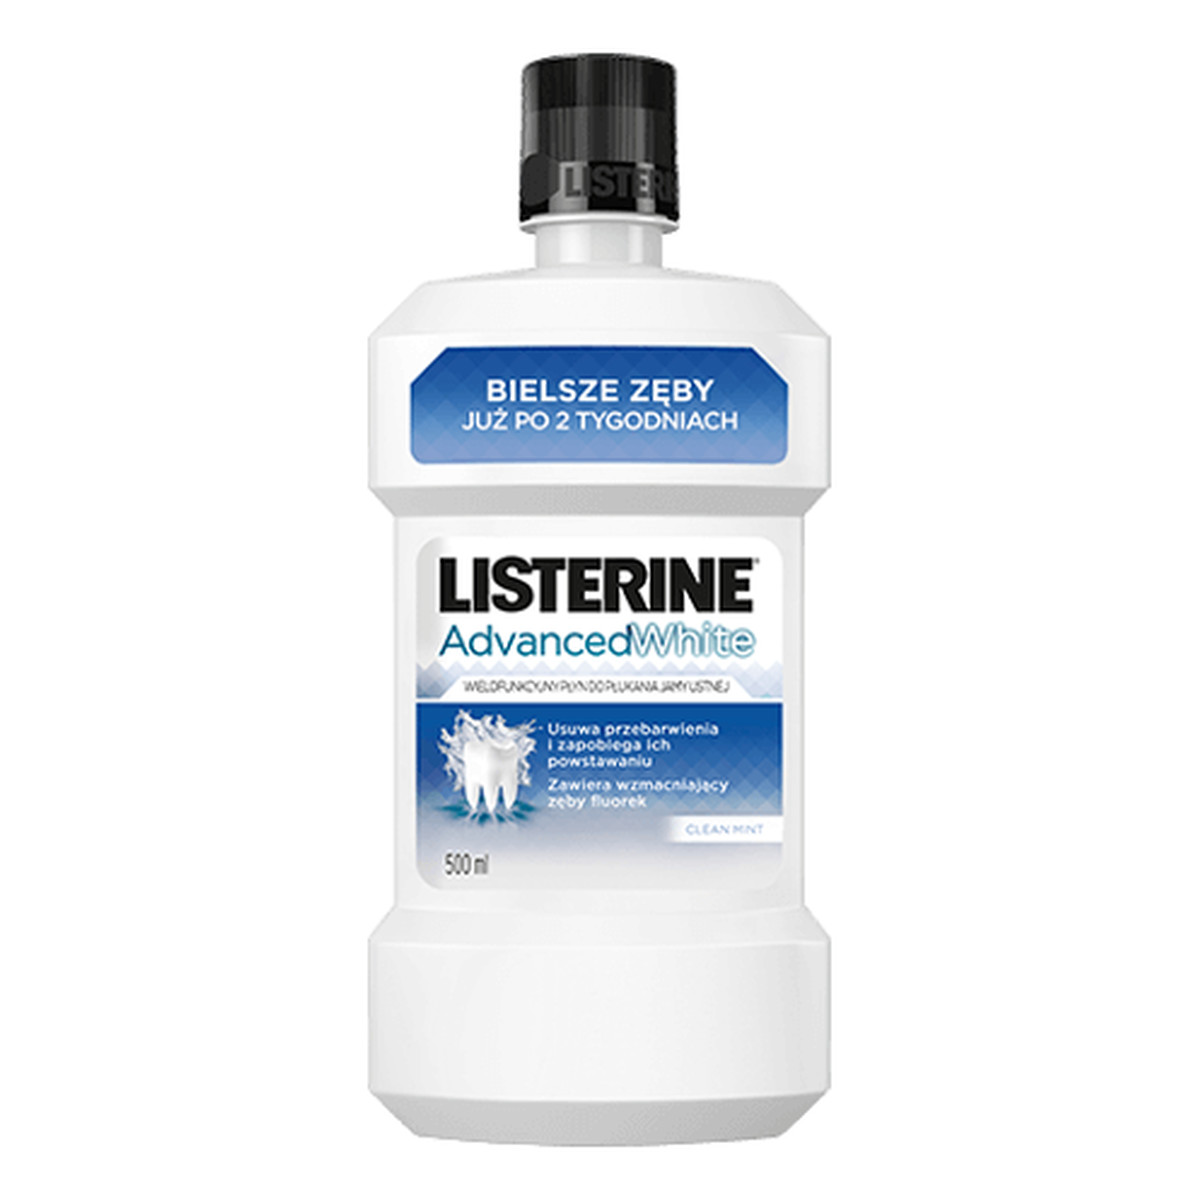 Listerine Advanced White płyn do płukania jamy ustnej (5+1) 500ml